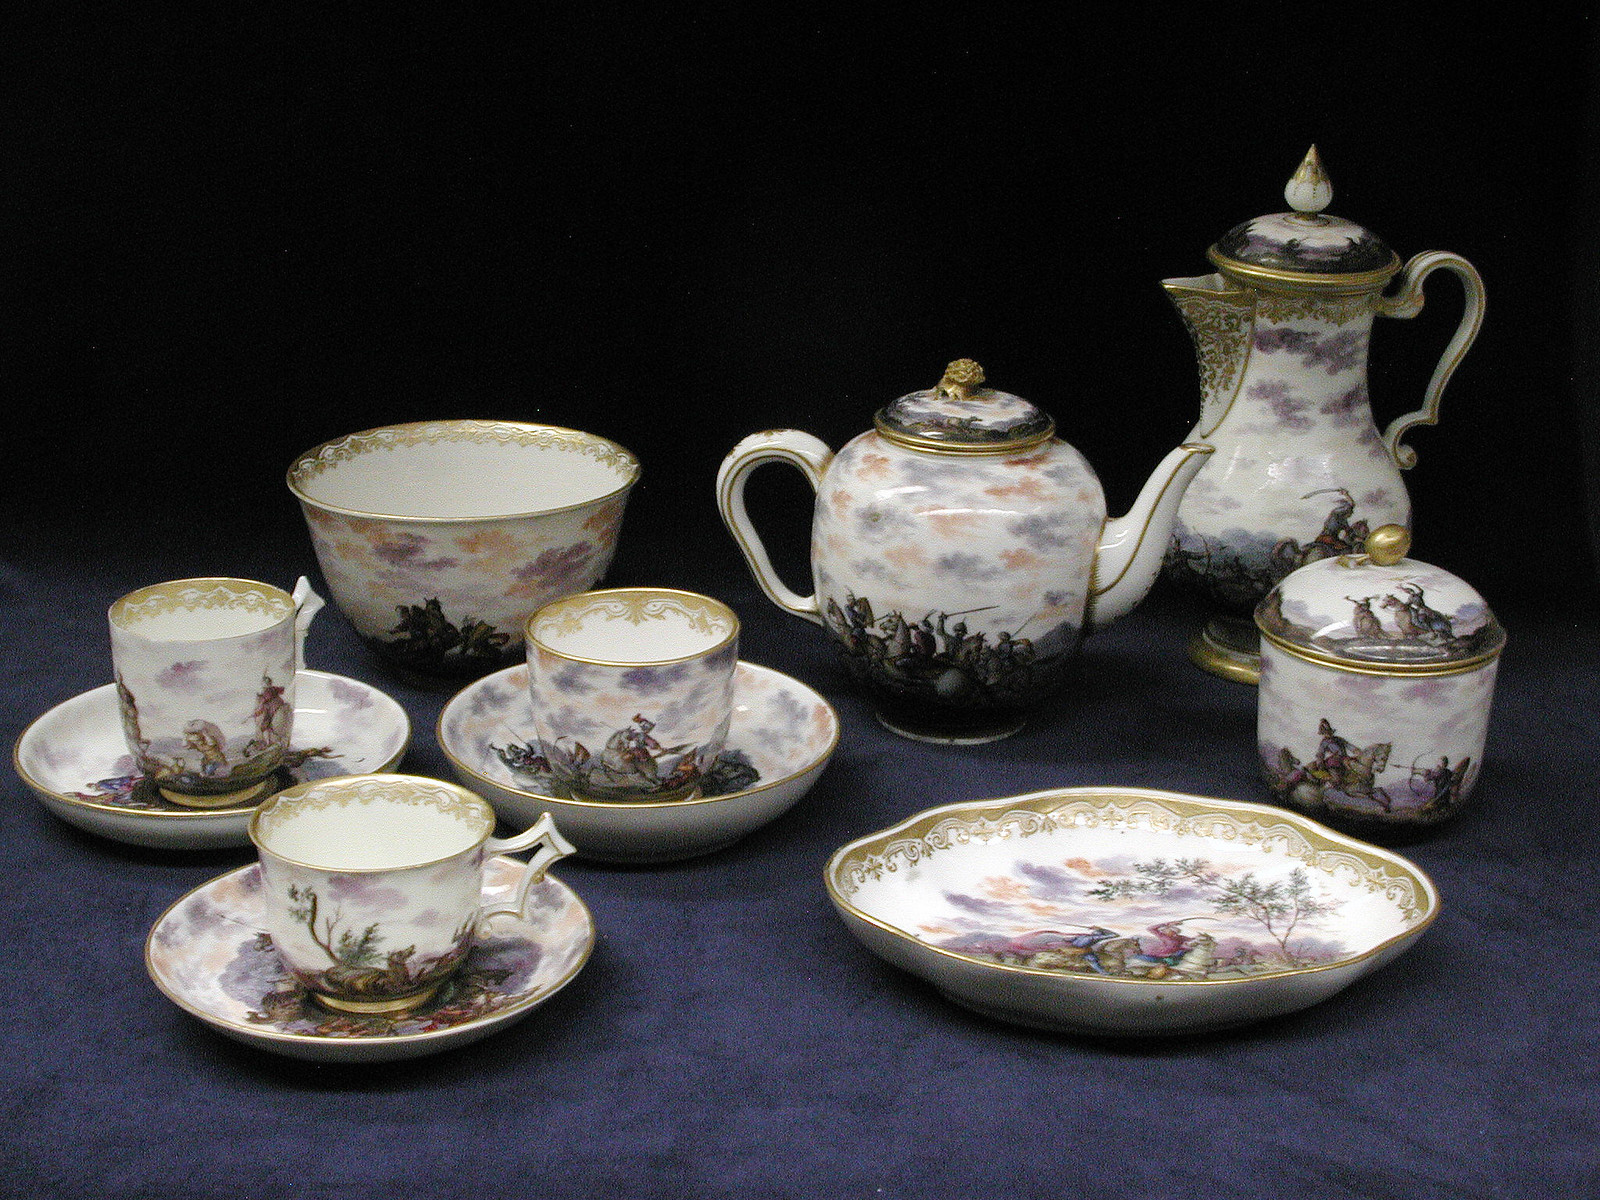 1743. Tea Service. Italian. Porcelain. metmuseum